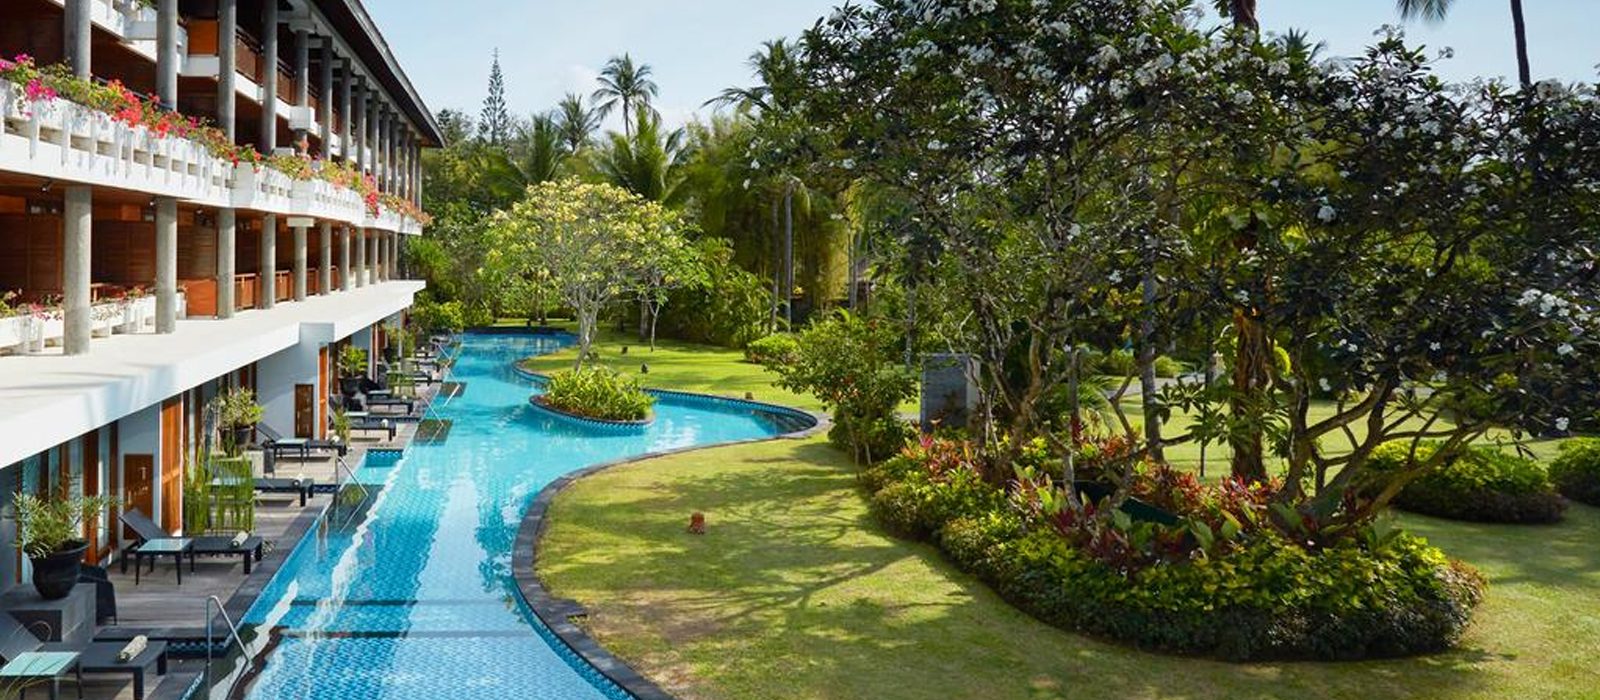 Luxury Bali Holiday Packages Melia Bali Header